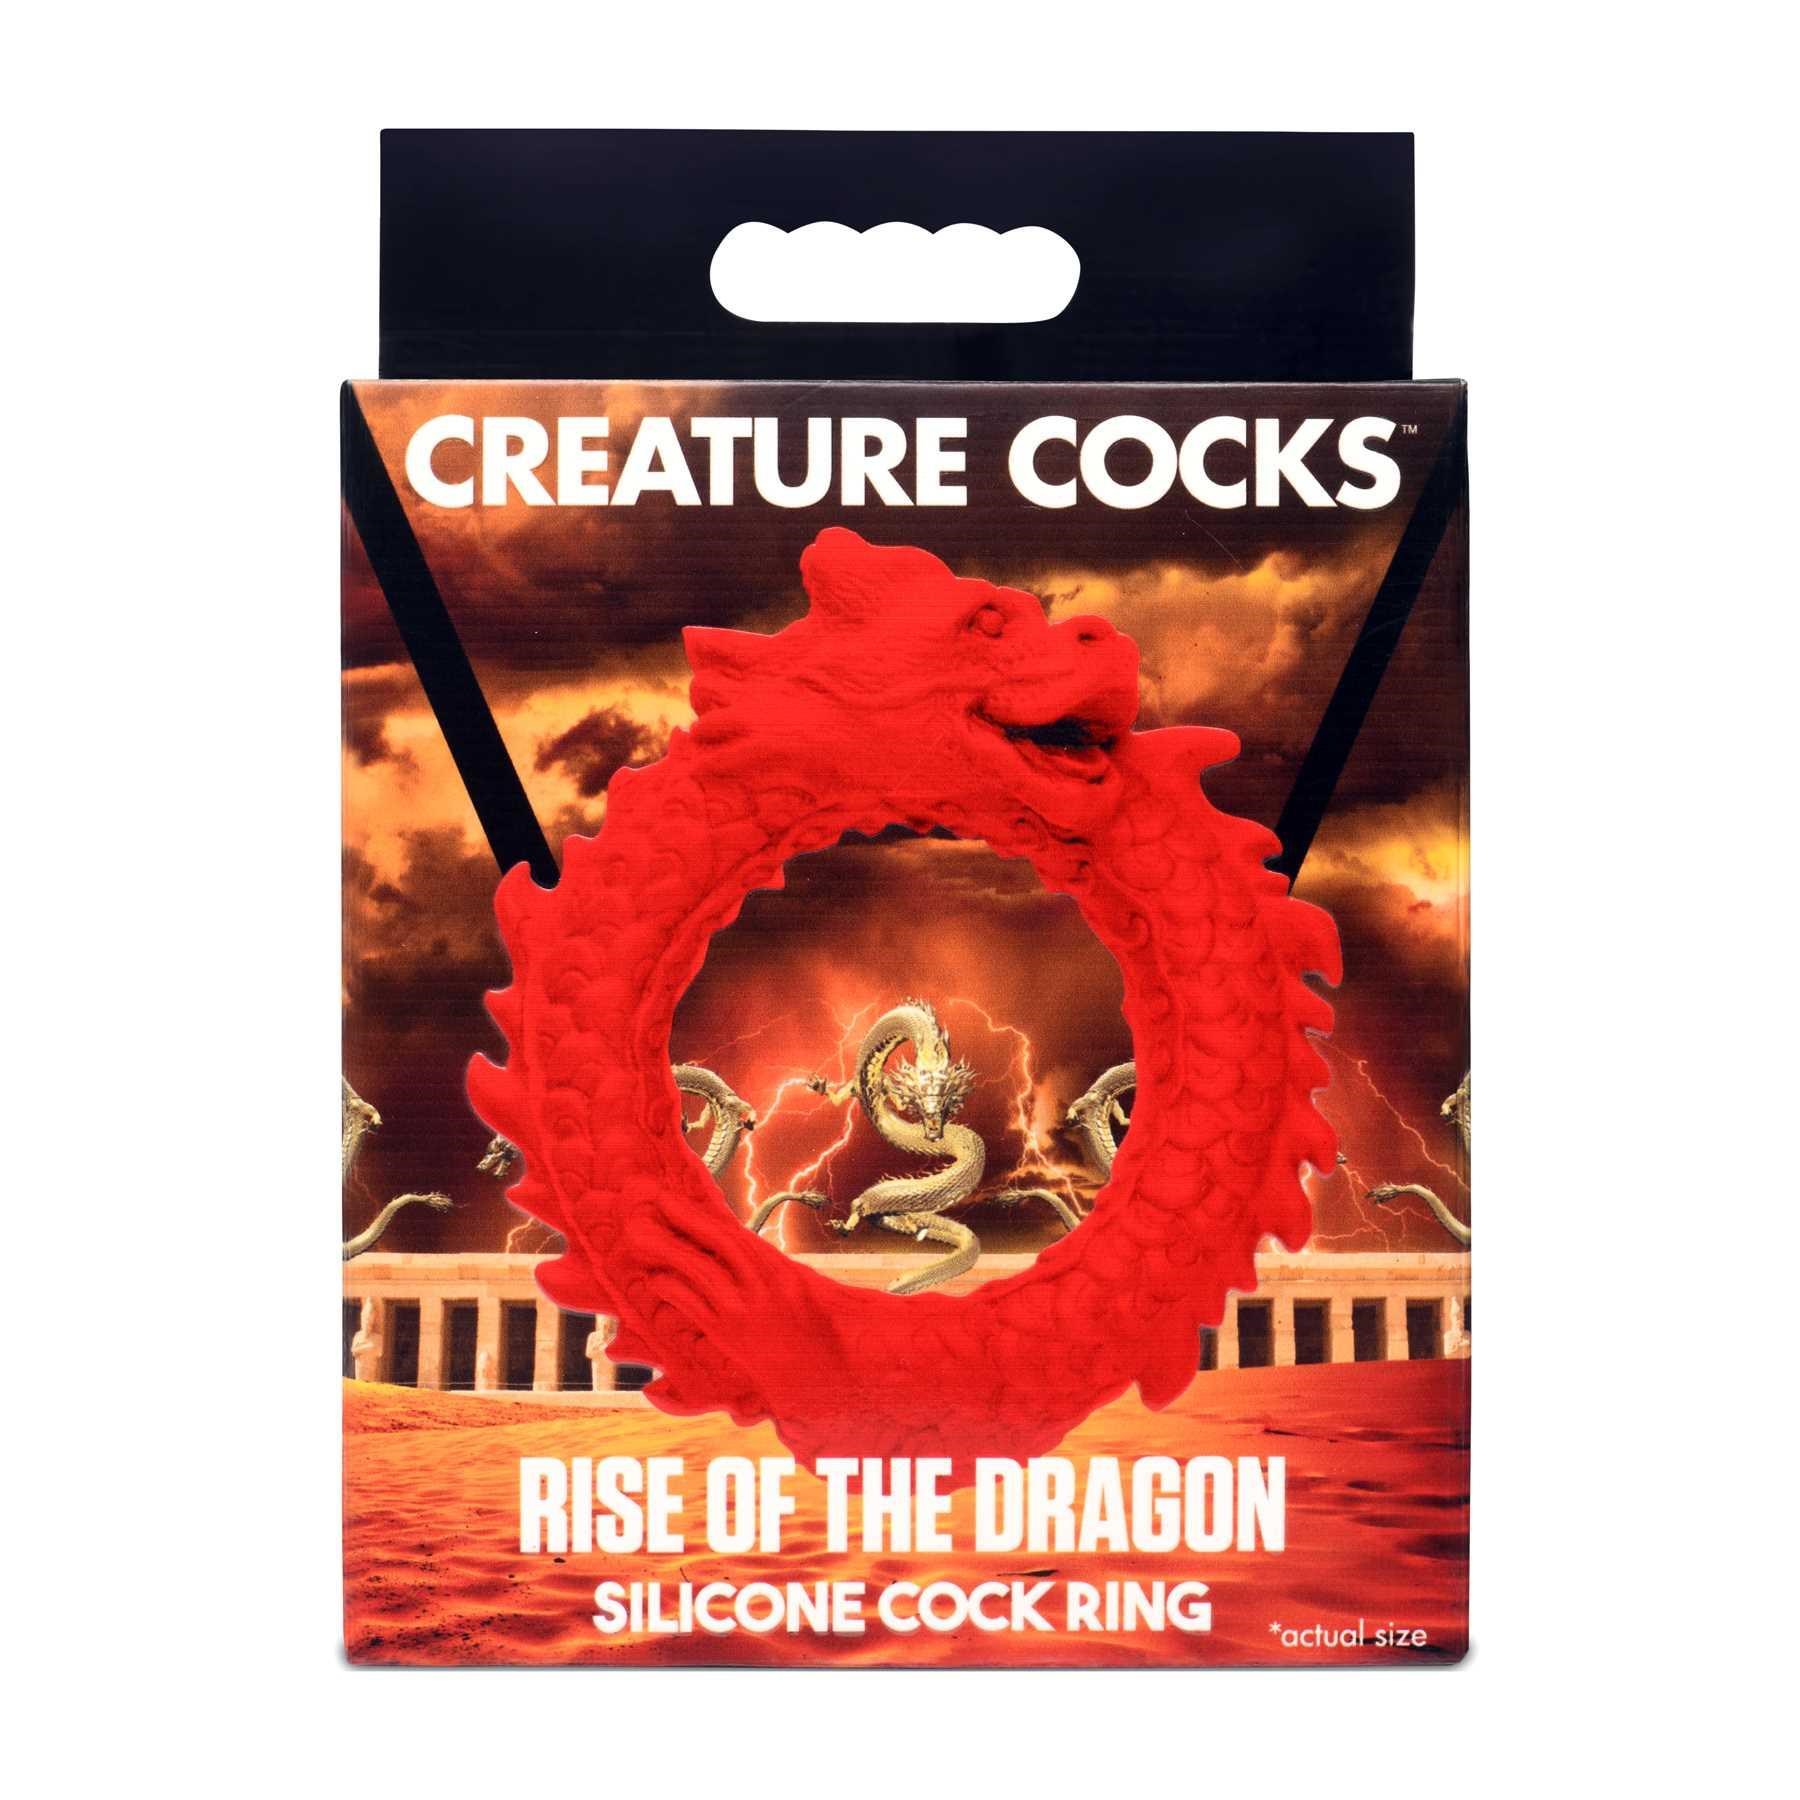 Creature Cocks Rise of the Dragon Silicone Cock Ring box